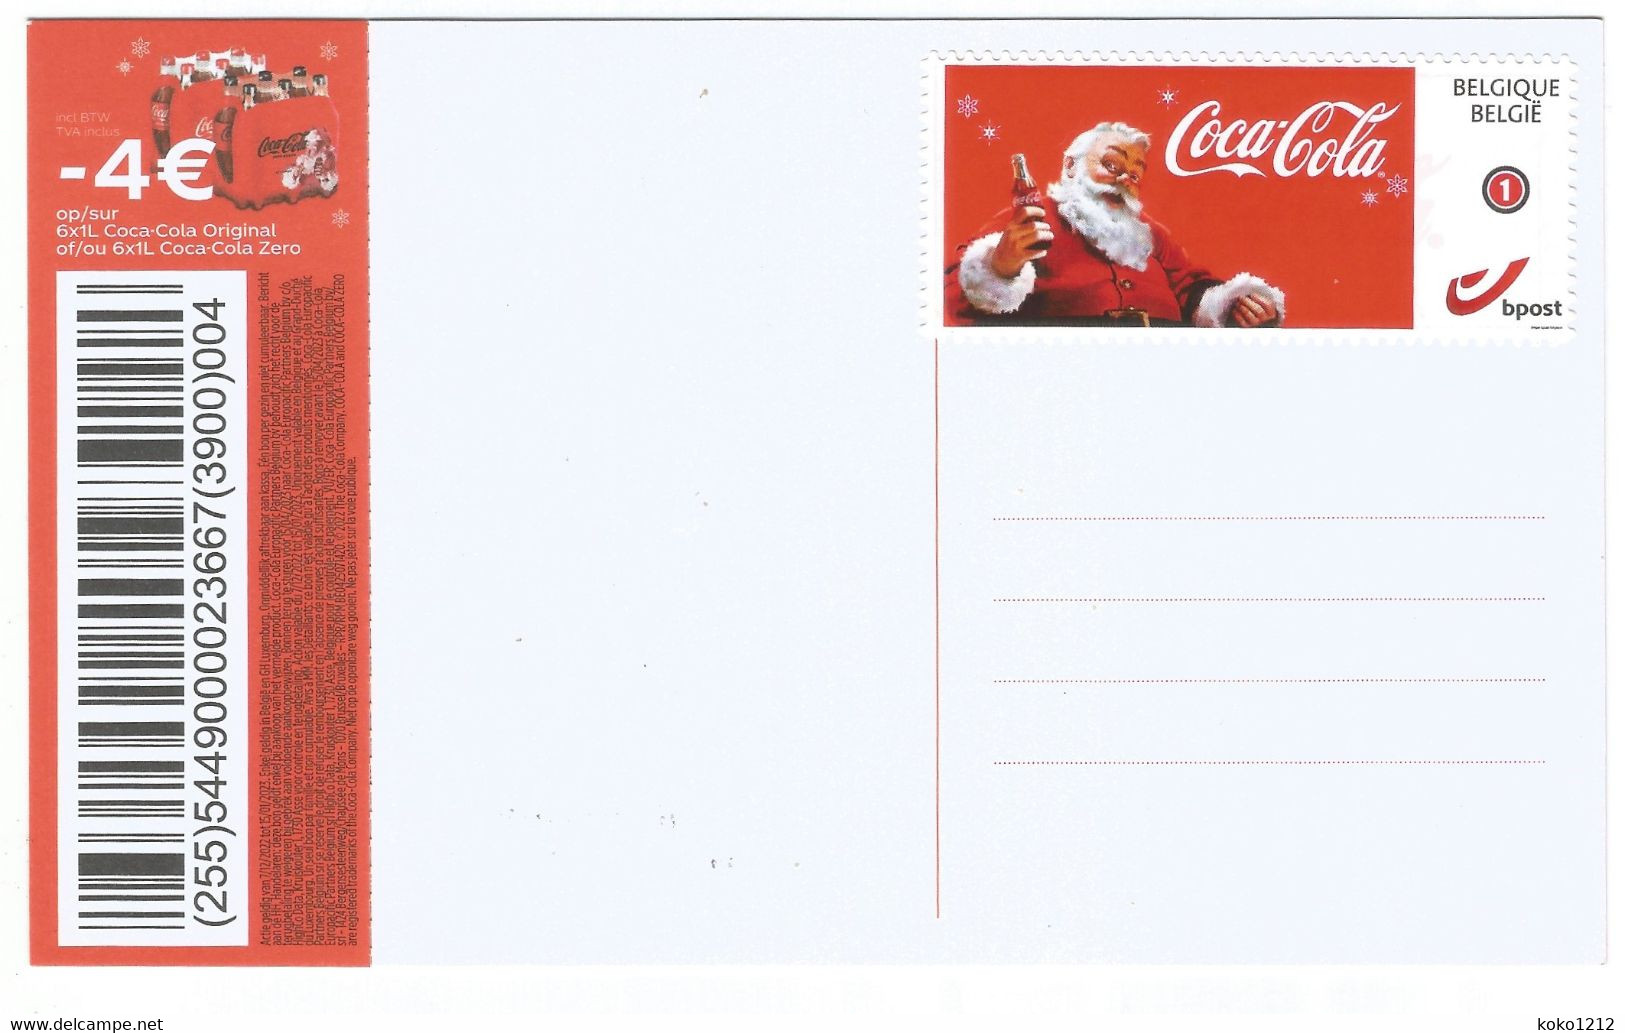 RARE CocaCola Belgium Postcard (1/2) With Private Stamp CocaCola NEUF - Cartes Postales